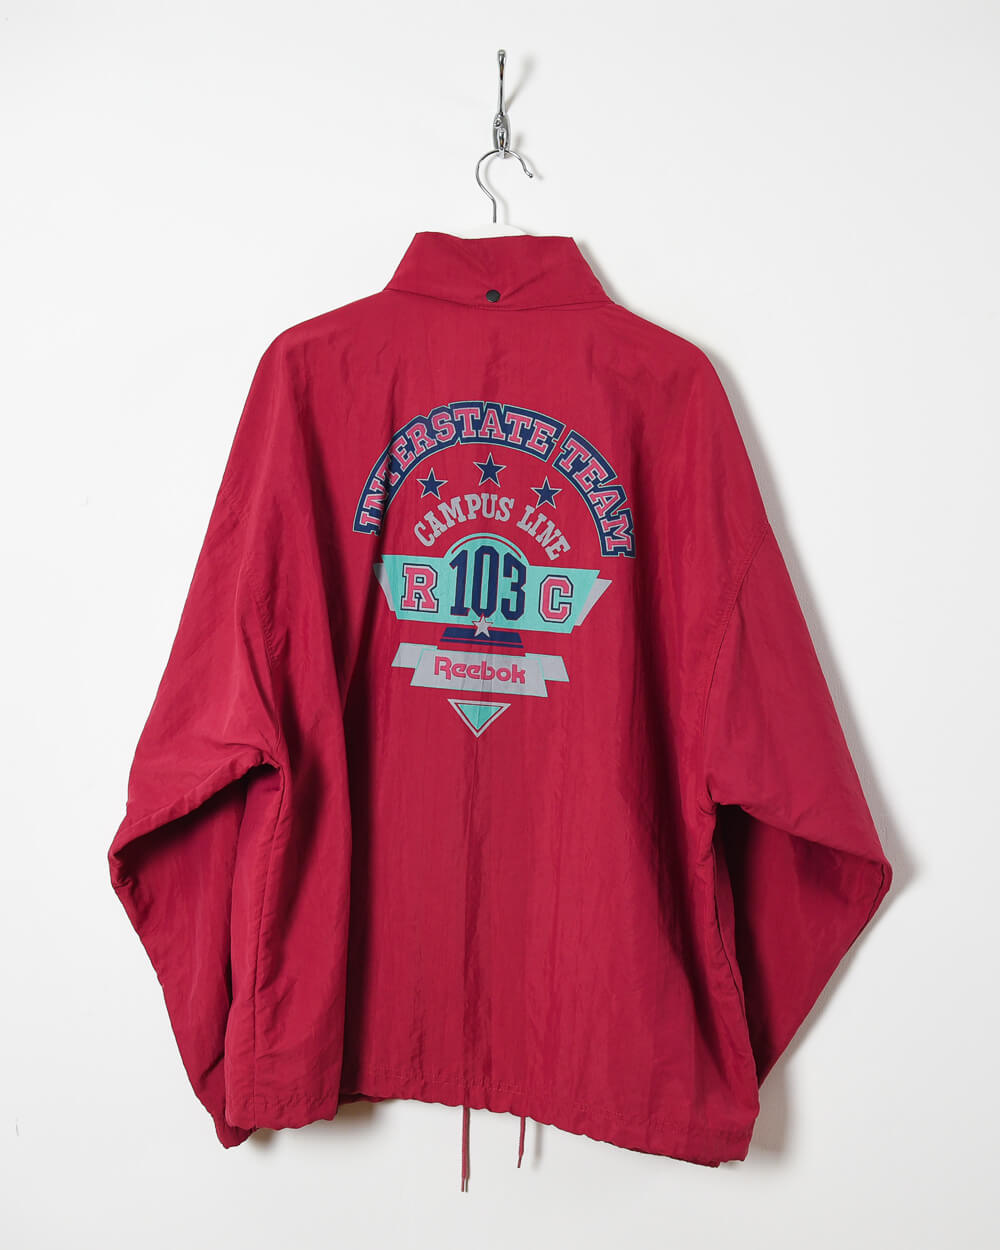 Reebok Interstate Team Campus Line 103 USA Windbreaker Jacket - X-Large - Domno Vintage 90s, 80s, 00s Retro and Vintage Clothing 